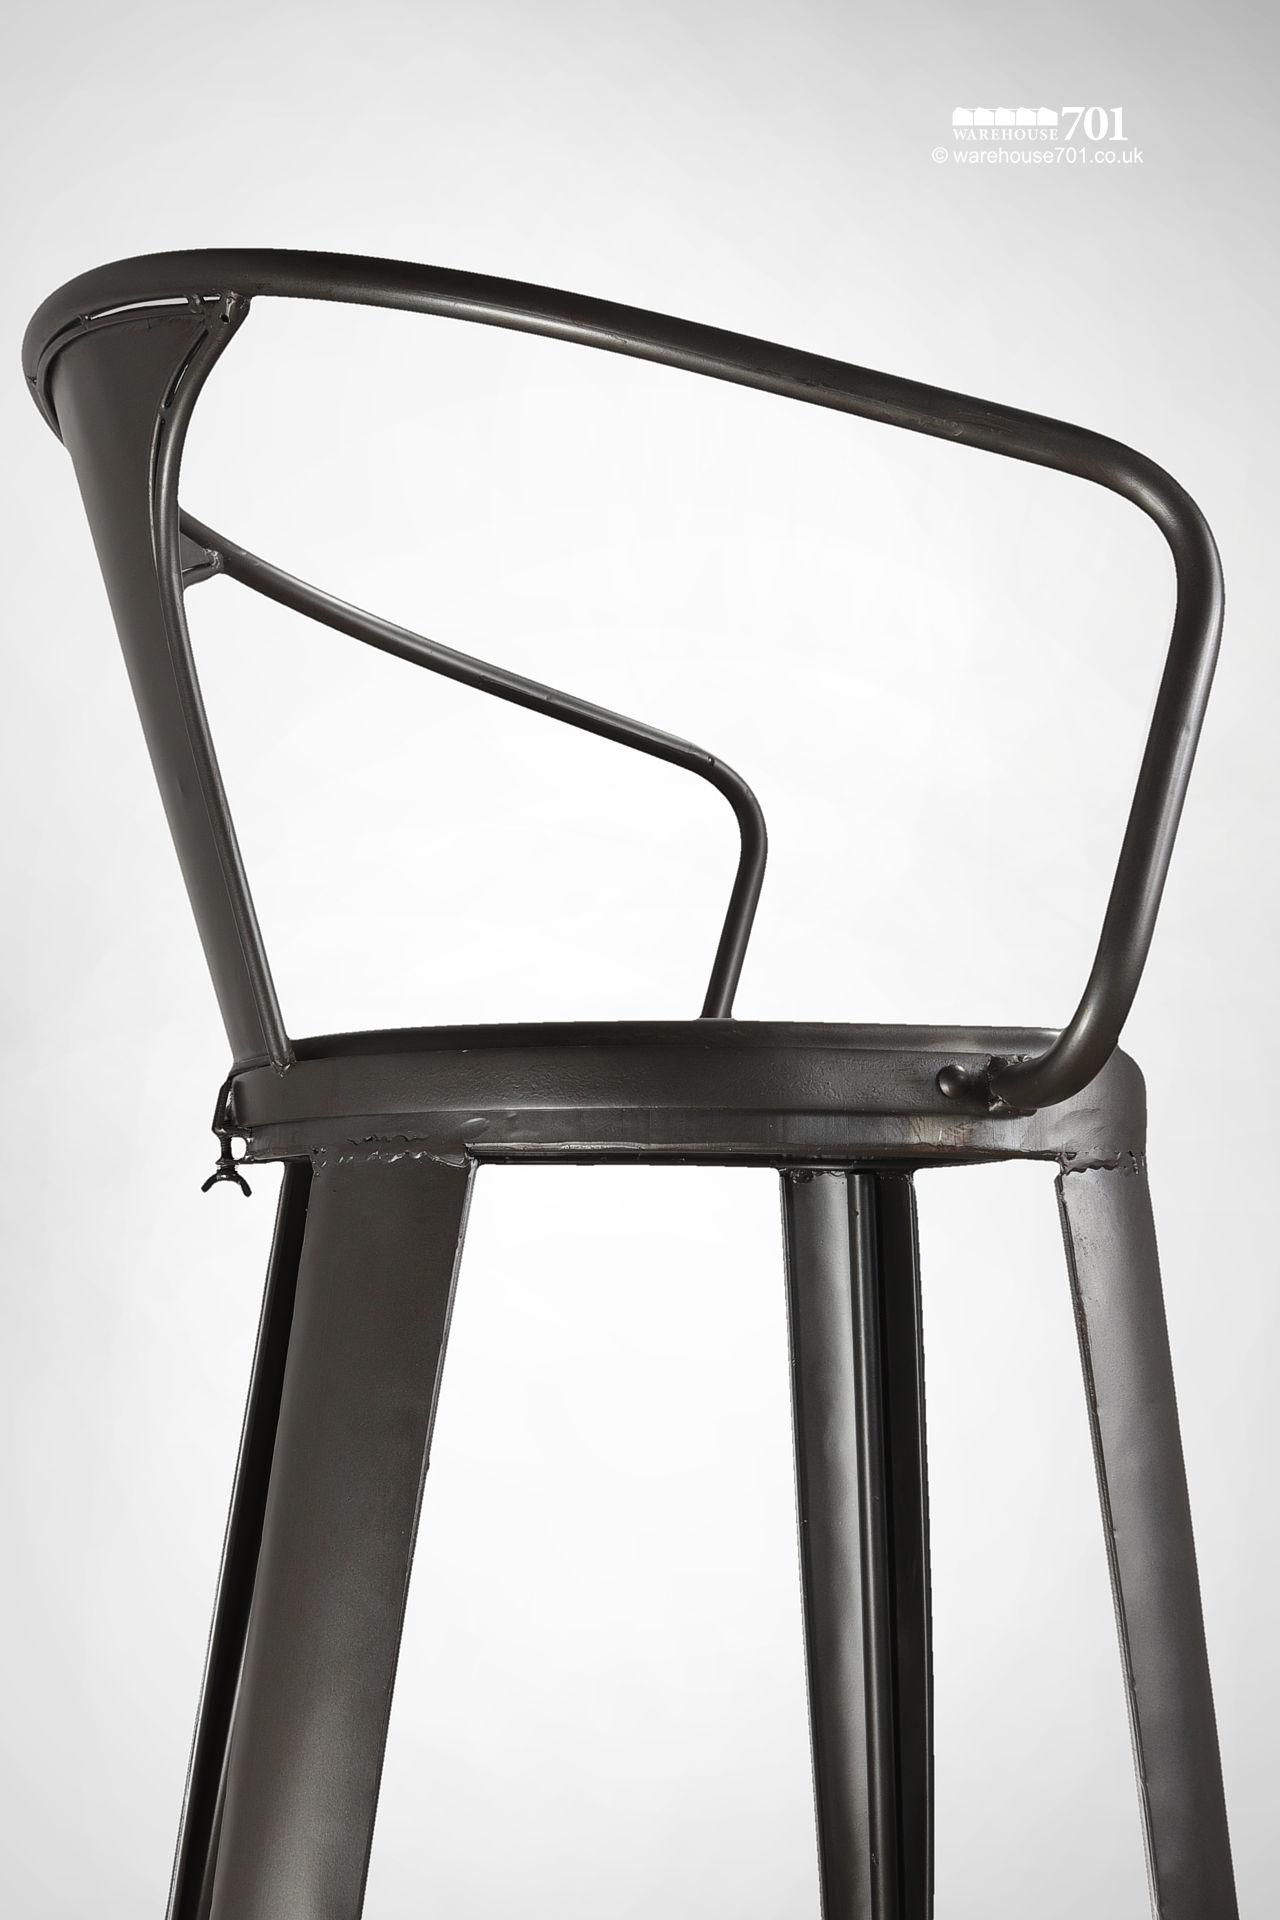 NEW handmade dark metal Bastille Chair, Cafe, Bistro or Counter Stool #4